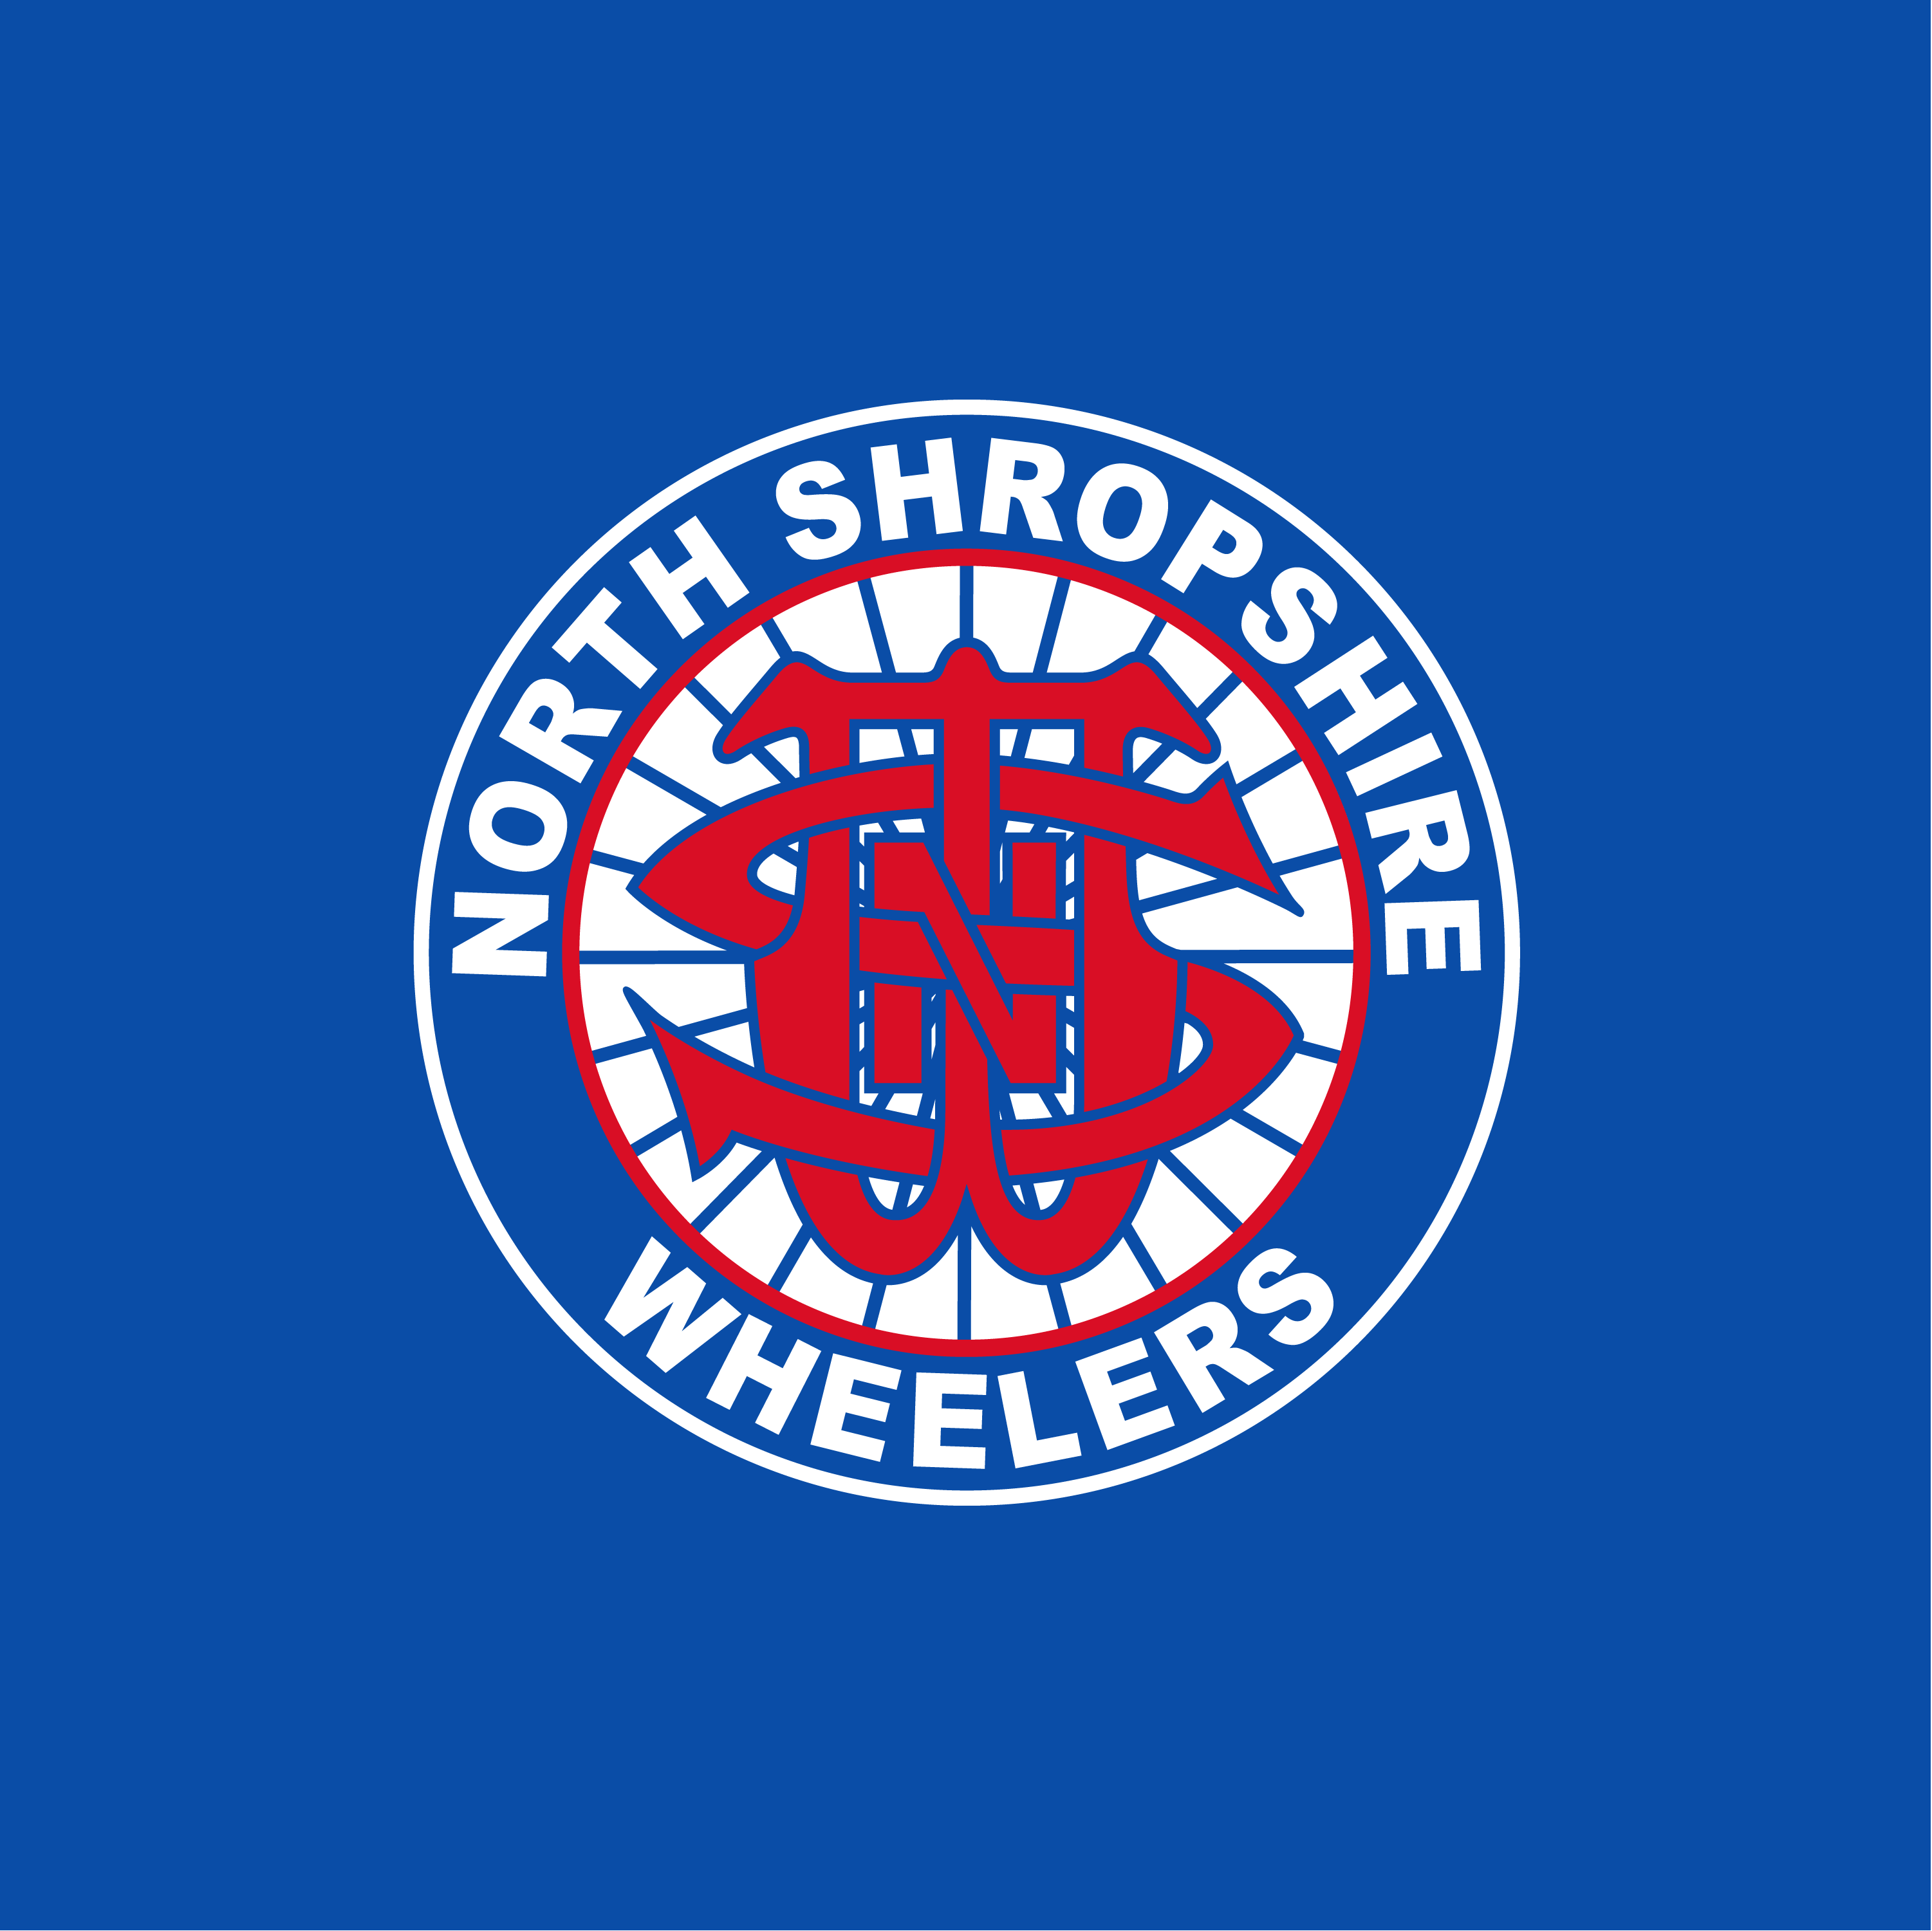 Club Image for NORTH SHROPSHIRE WHEELERS